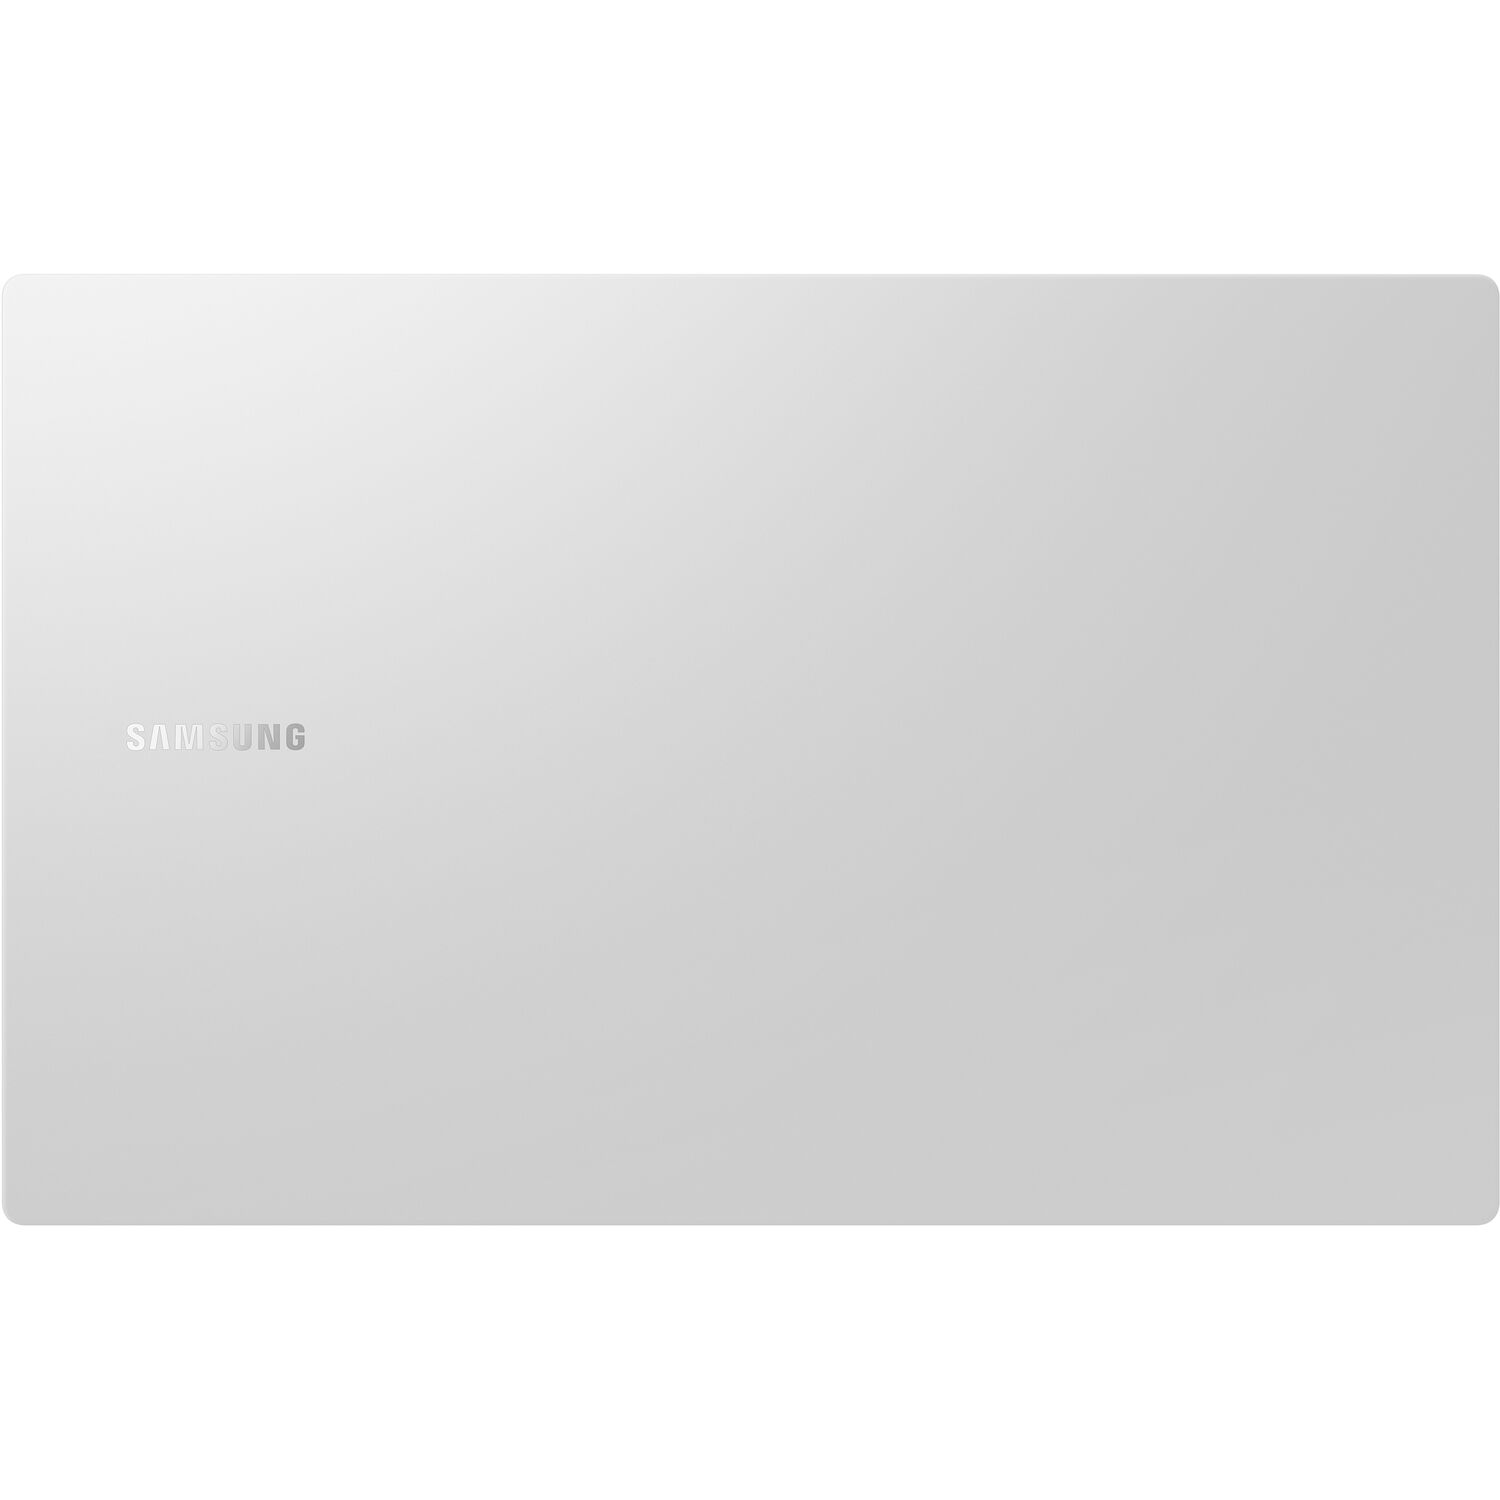 Samsung NP950XDB-KA2US-RB Galaxy Book Pro 15.6" FHD i5-1135G7 8GB 512GB W10H Silver - Certified Refurbished